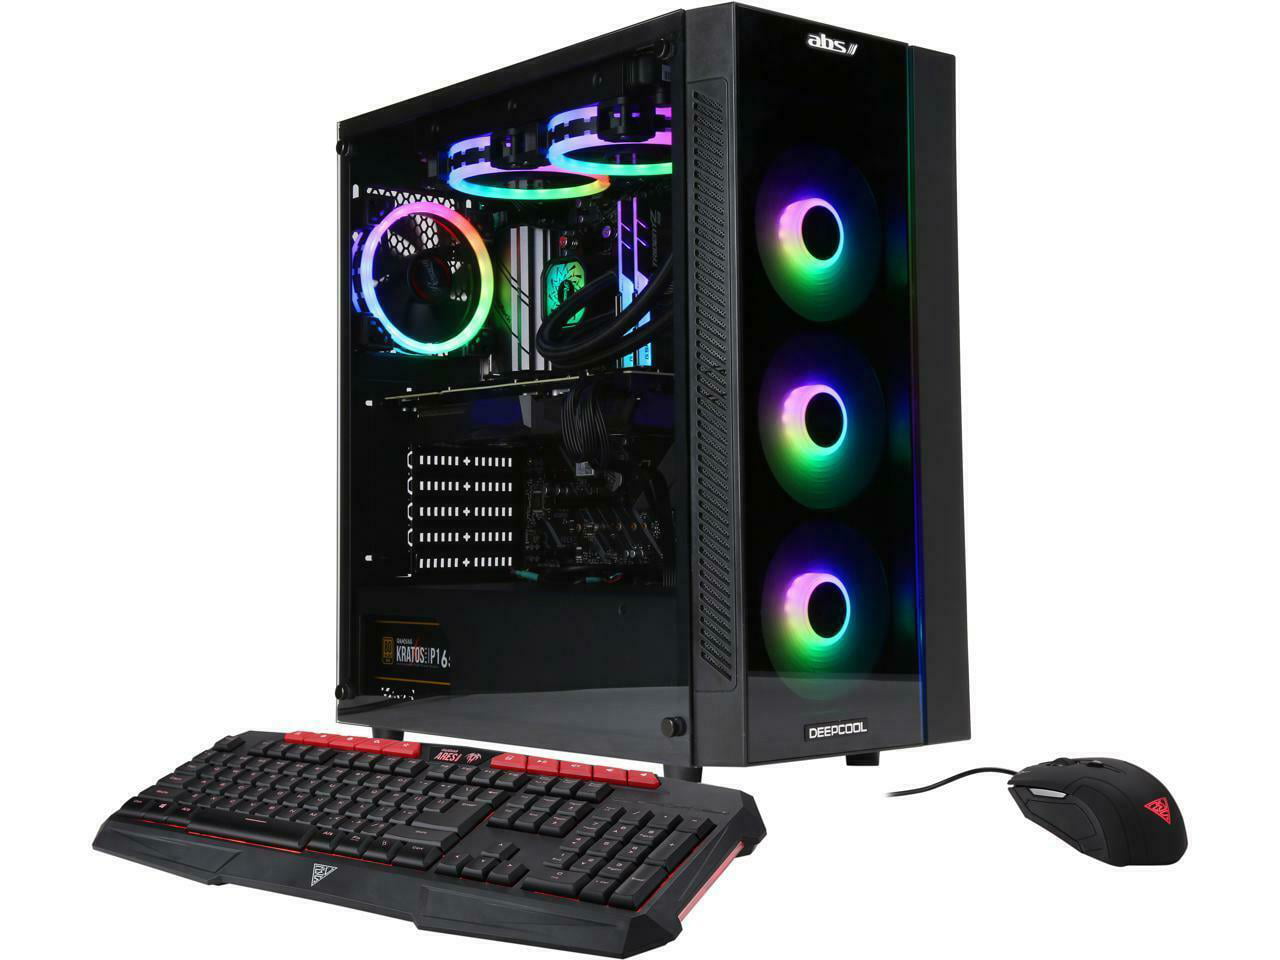 ABS Mage H - Intel i7-9700K - GeForce RTX 2070 Super - G.SKILL TridentZ RGB  16GB DDR4 - 1TB SSD - Liquid Cooling (240mm) - Gaming Desktop PC Computer 